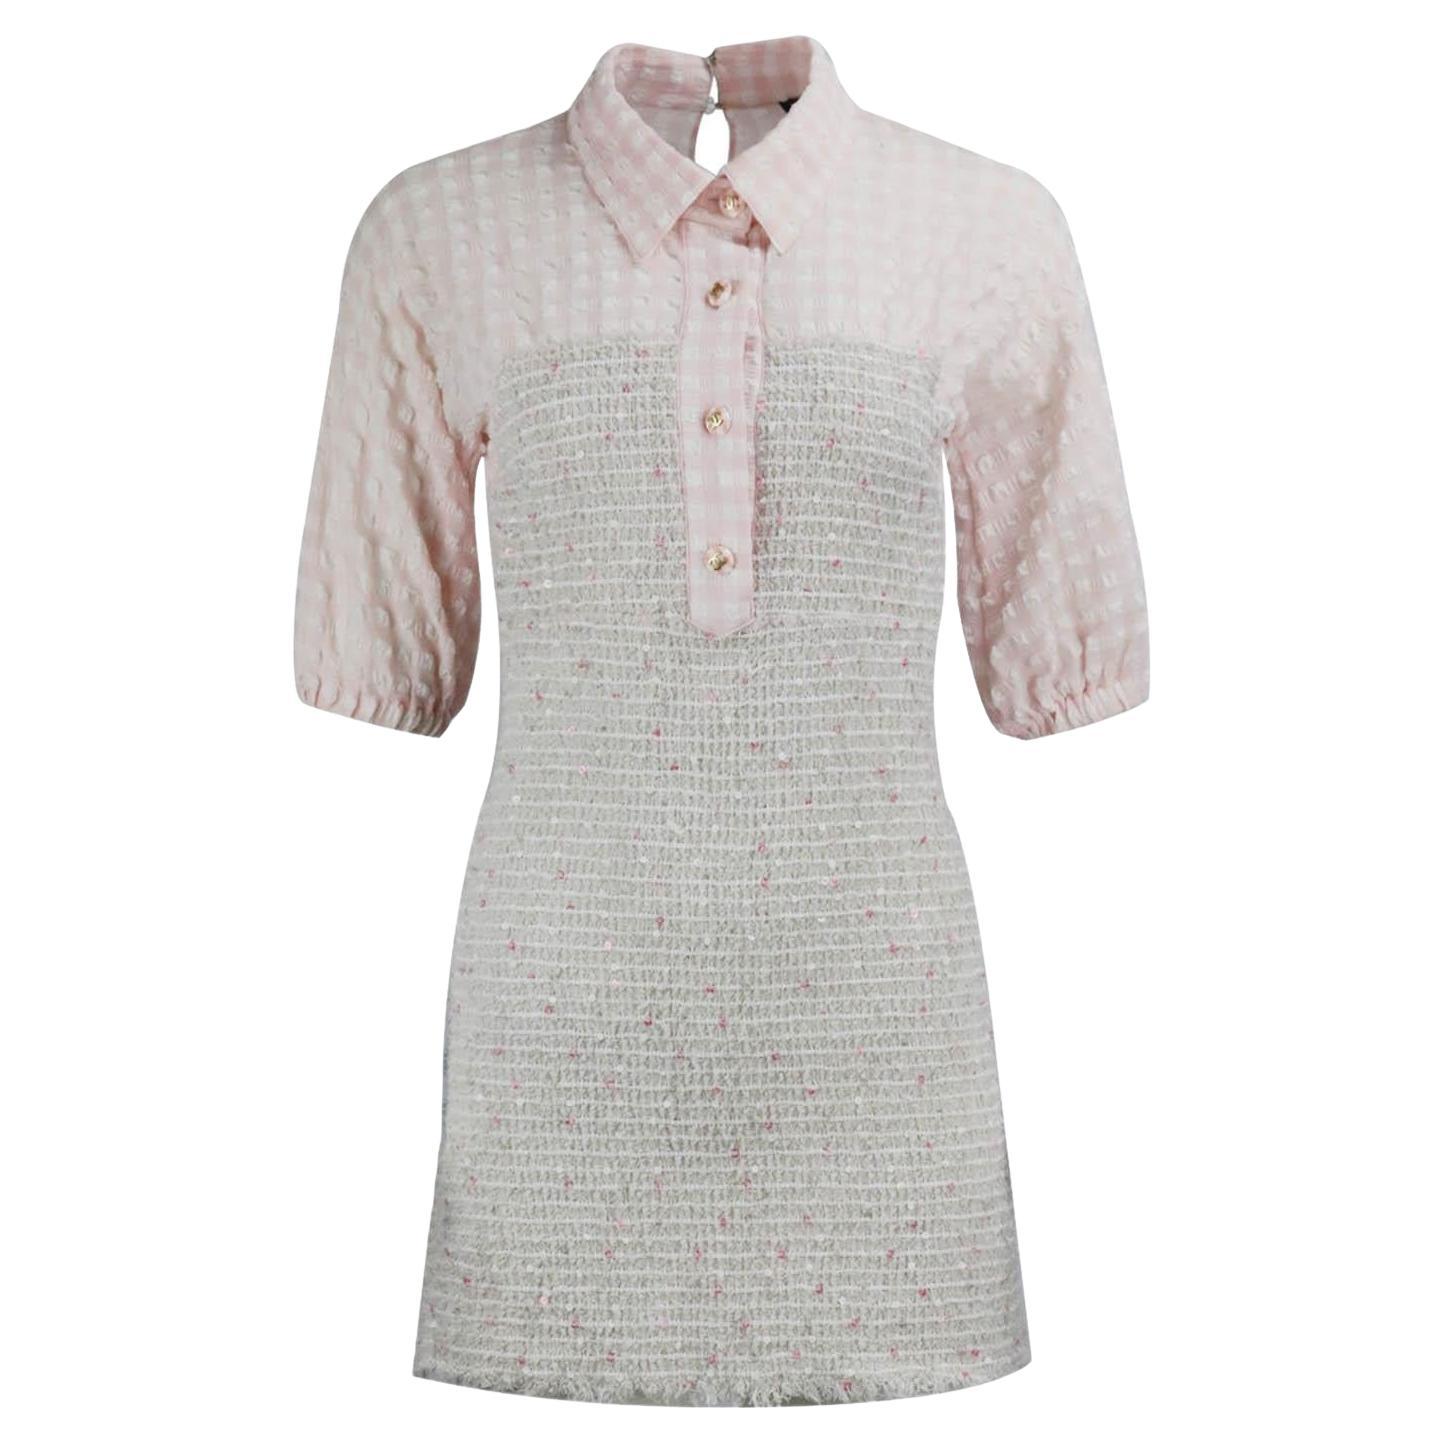 Chanel Sample Cotton Blend Tweed Mini Dress Fr 38 Uk 10